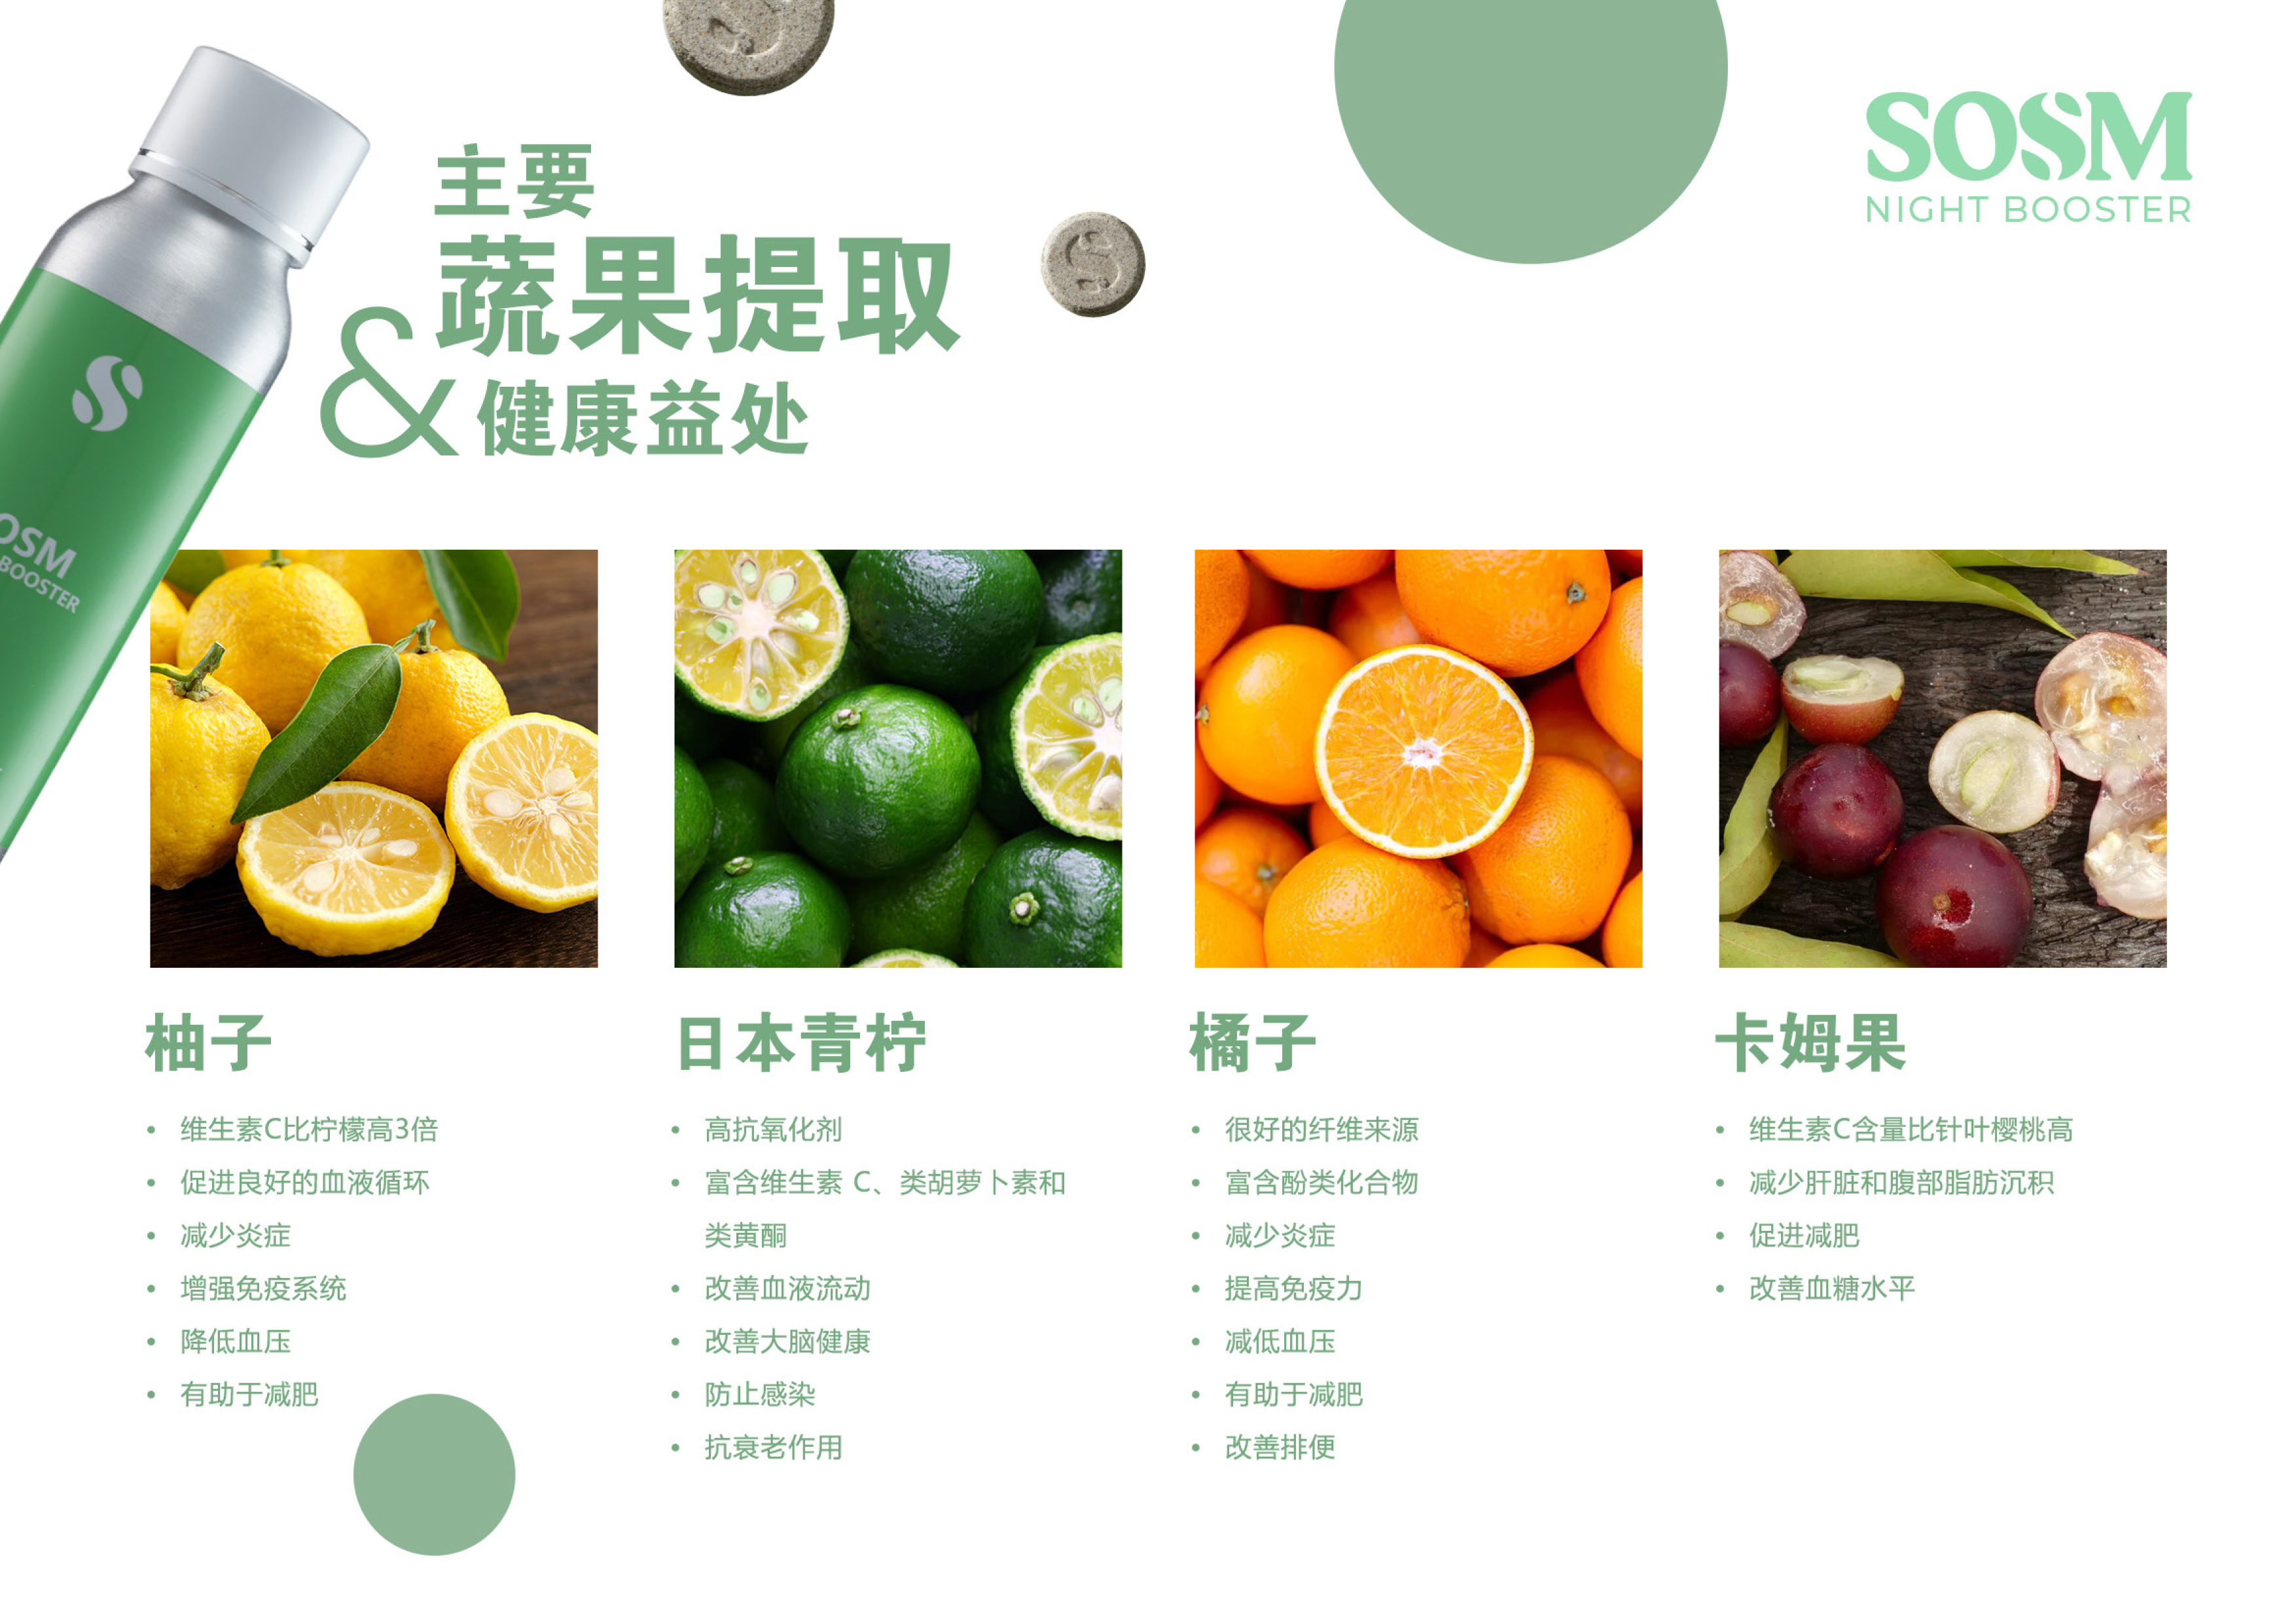 SOSM Night Booster 4 Fruits Ingredients